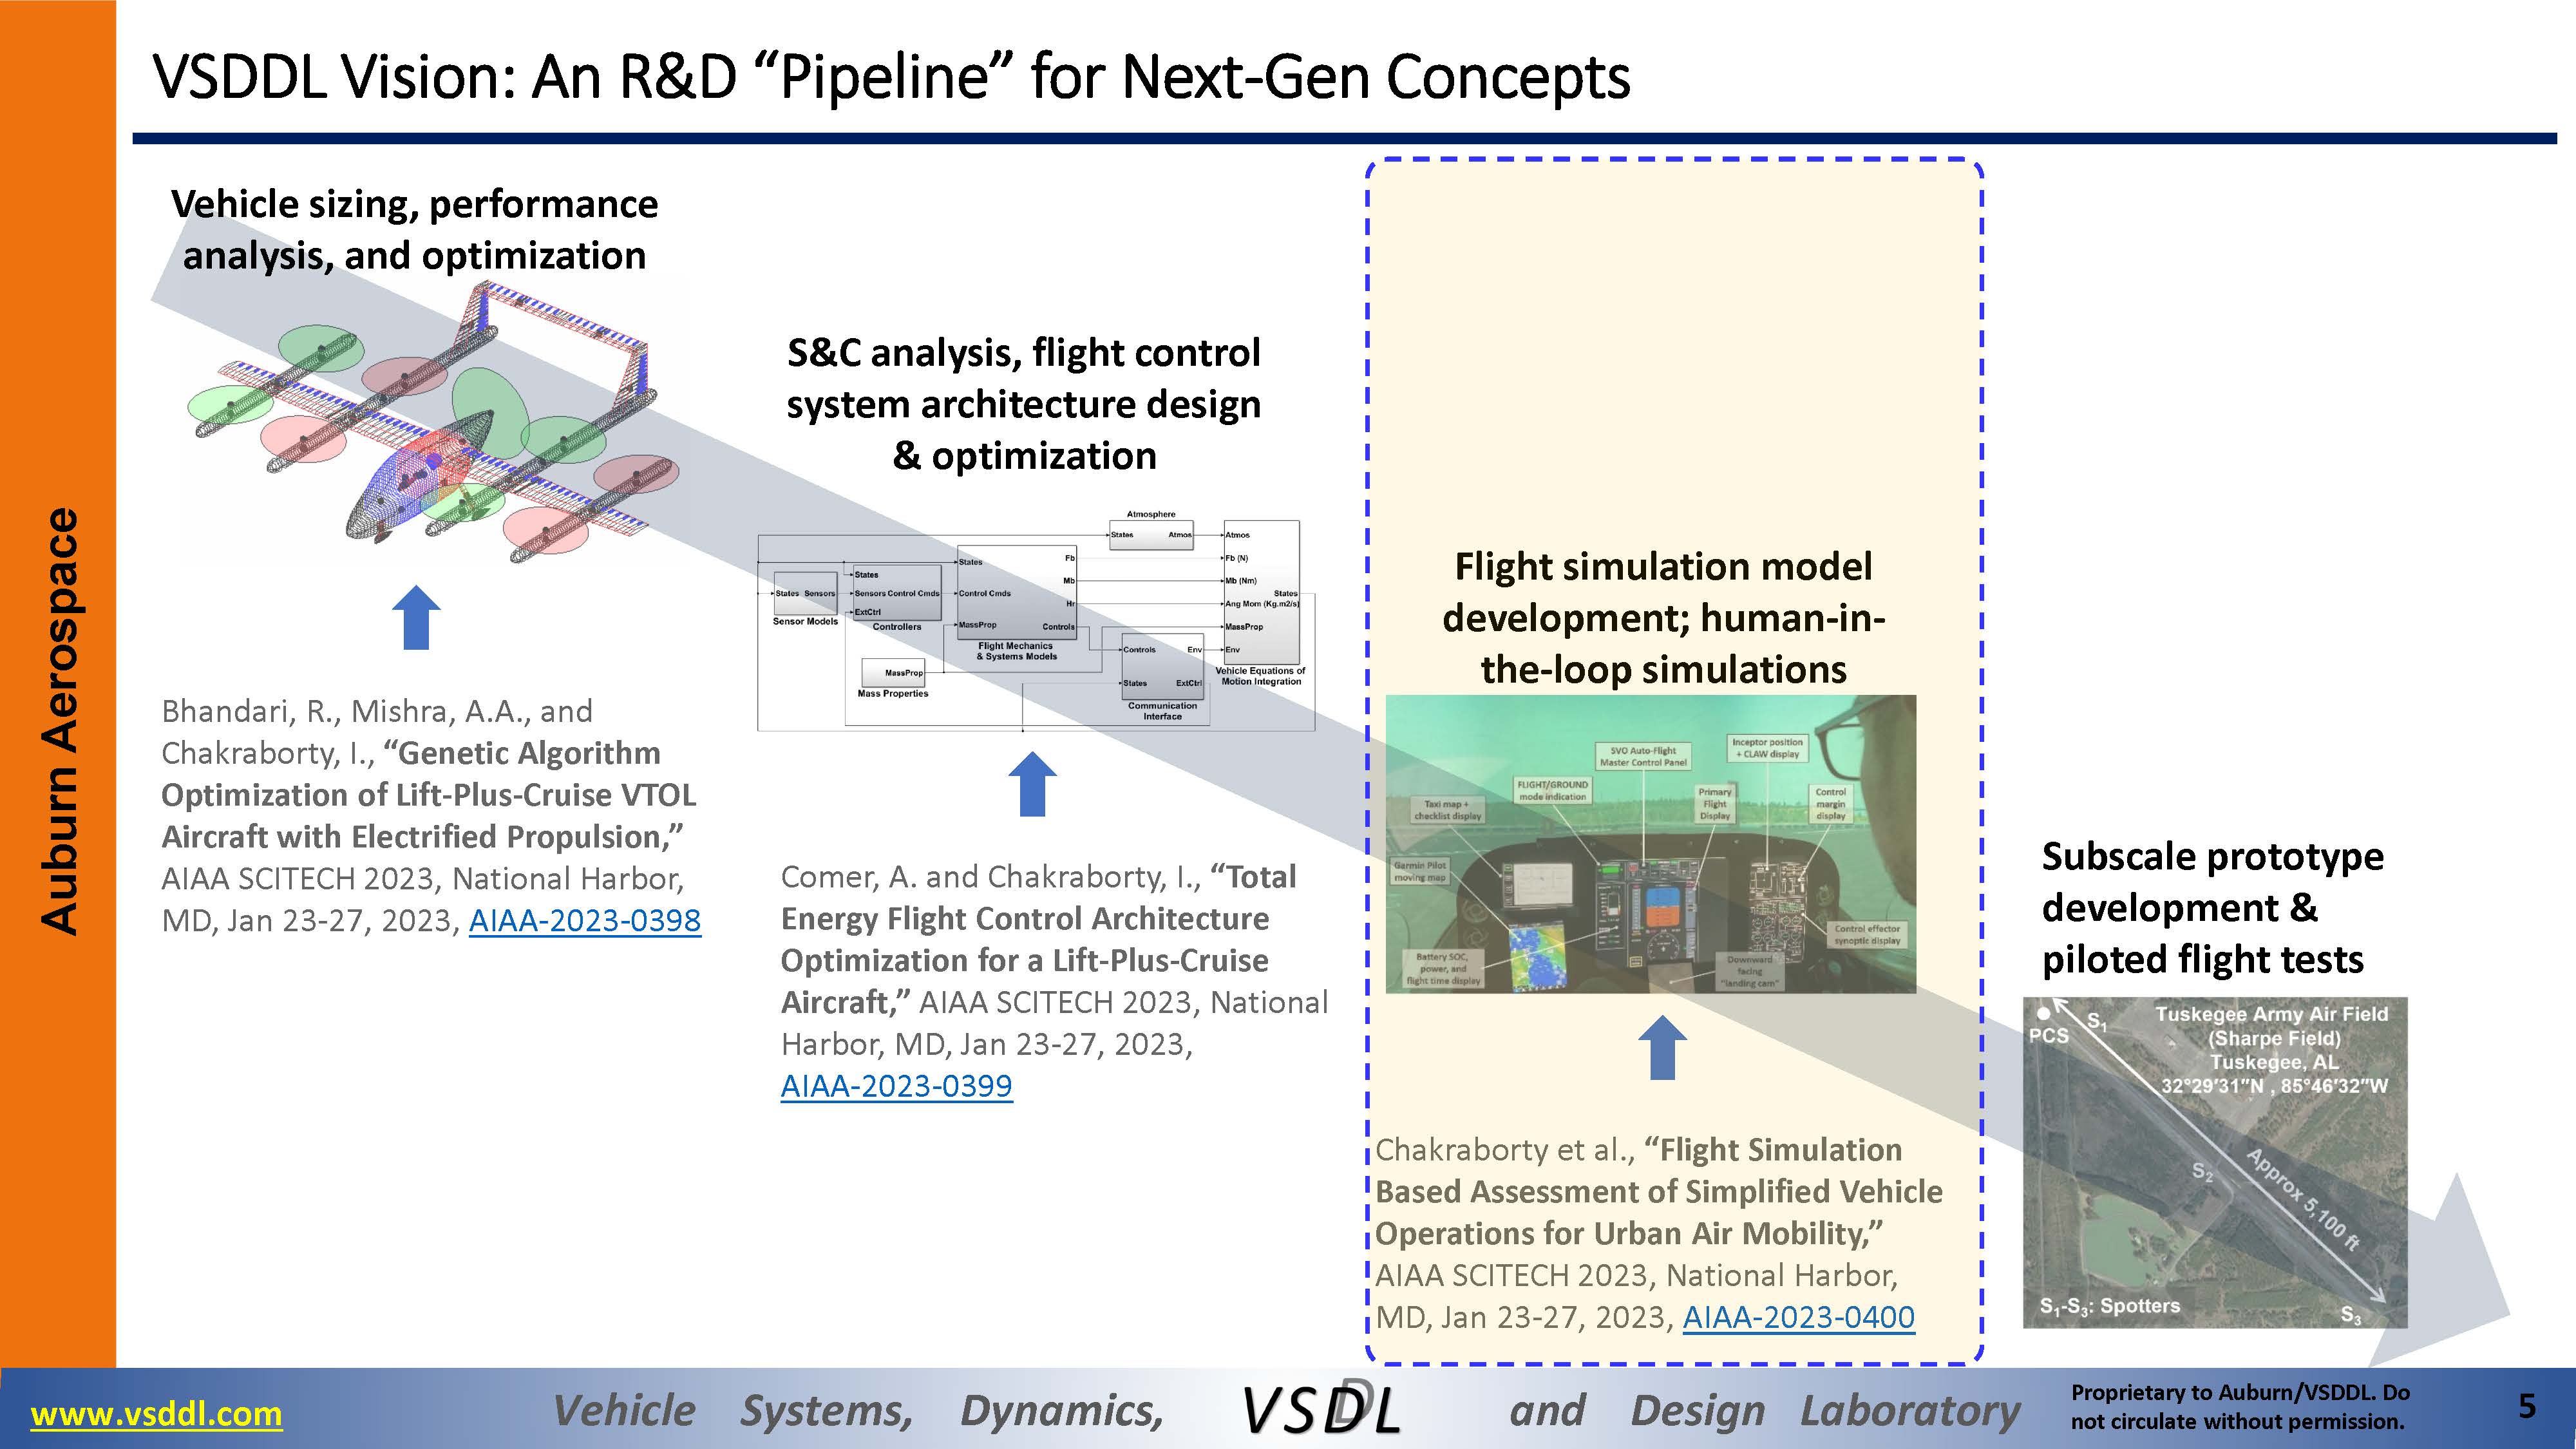 A R&D “Pipeline” for Next-Gen Aircraft Concepts